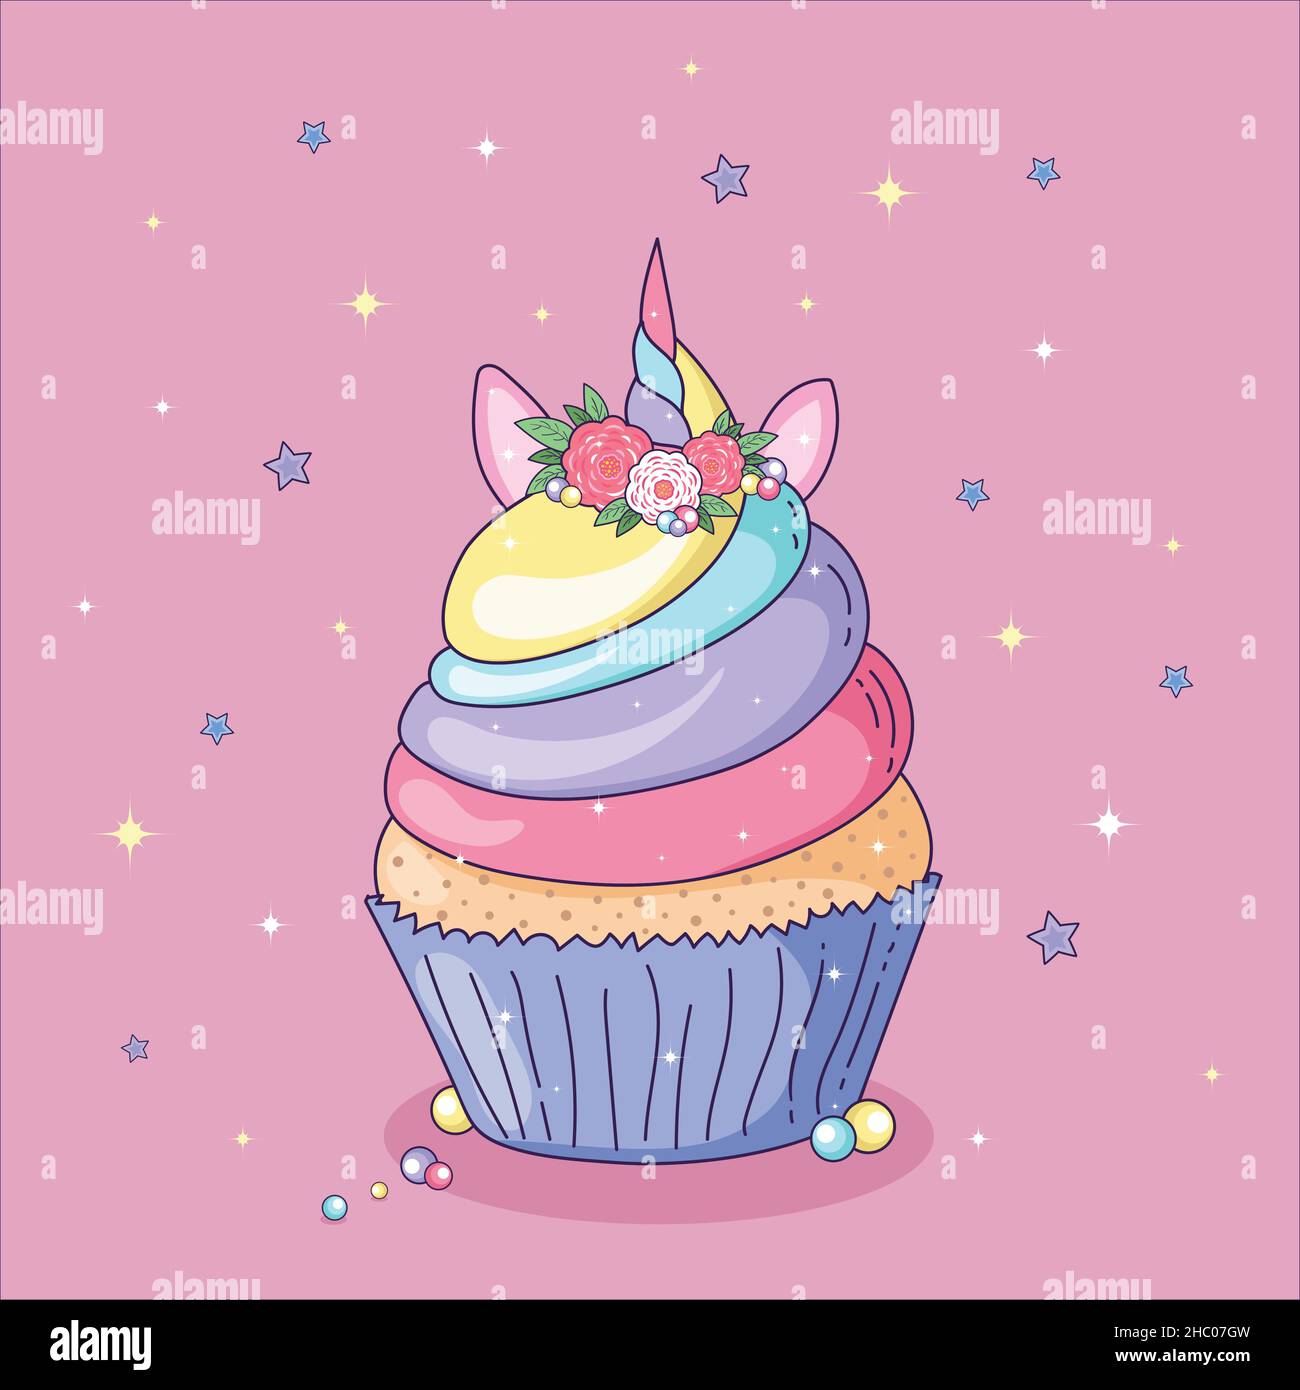 Carino cupcake unicorno su sfondo rosa, illustrazione vettoriale. Illustrazione Vettoriale